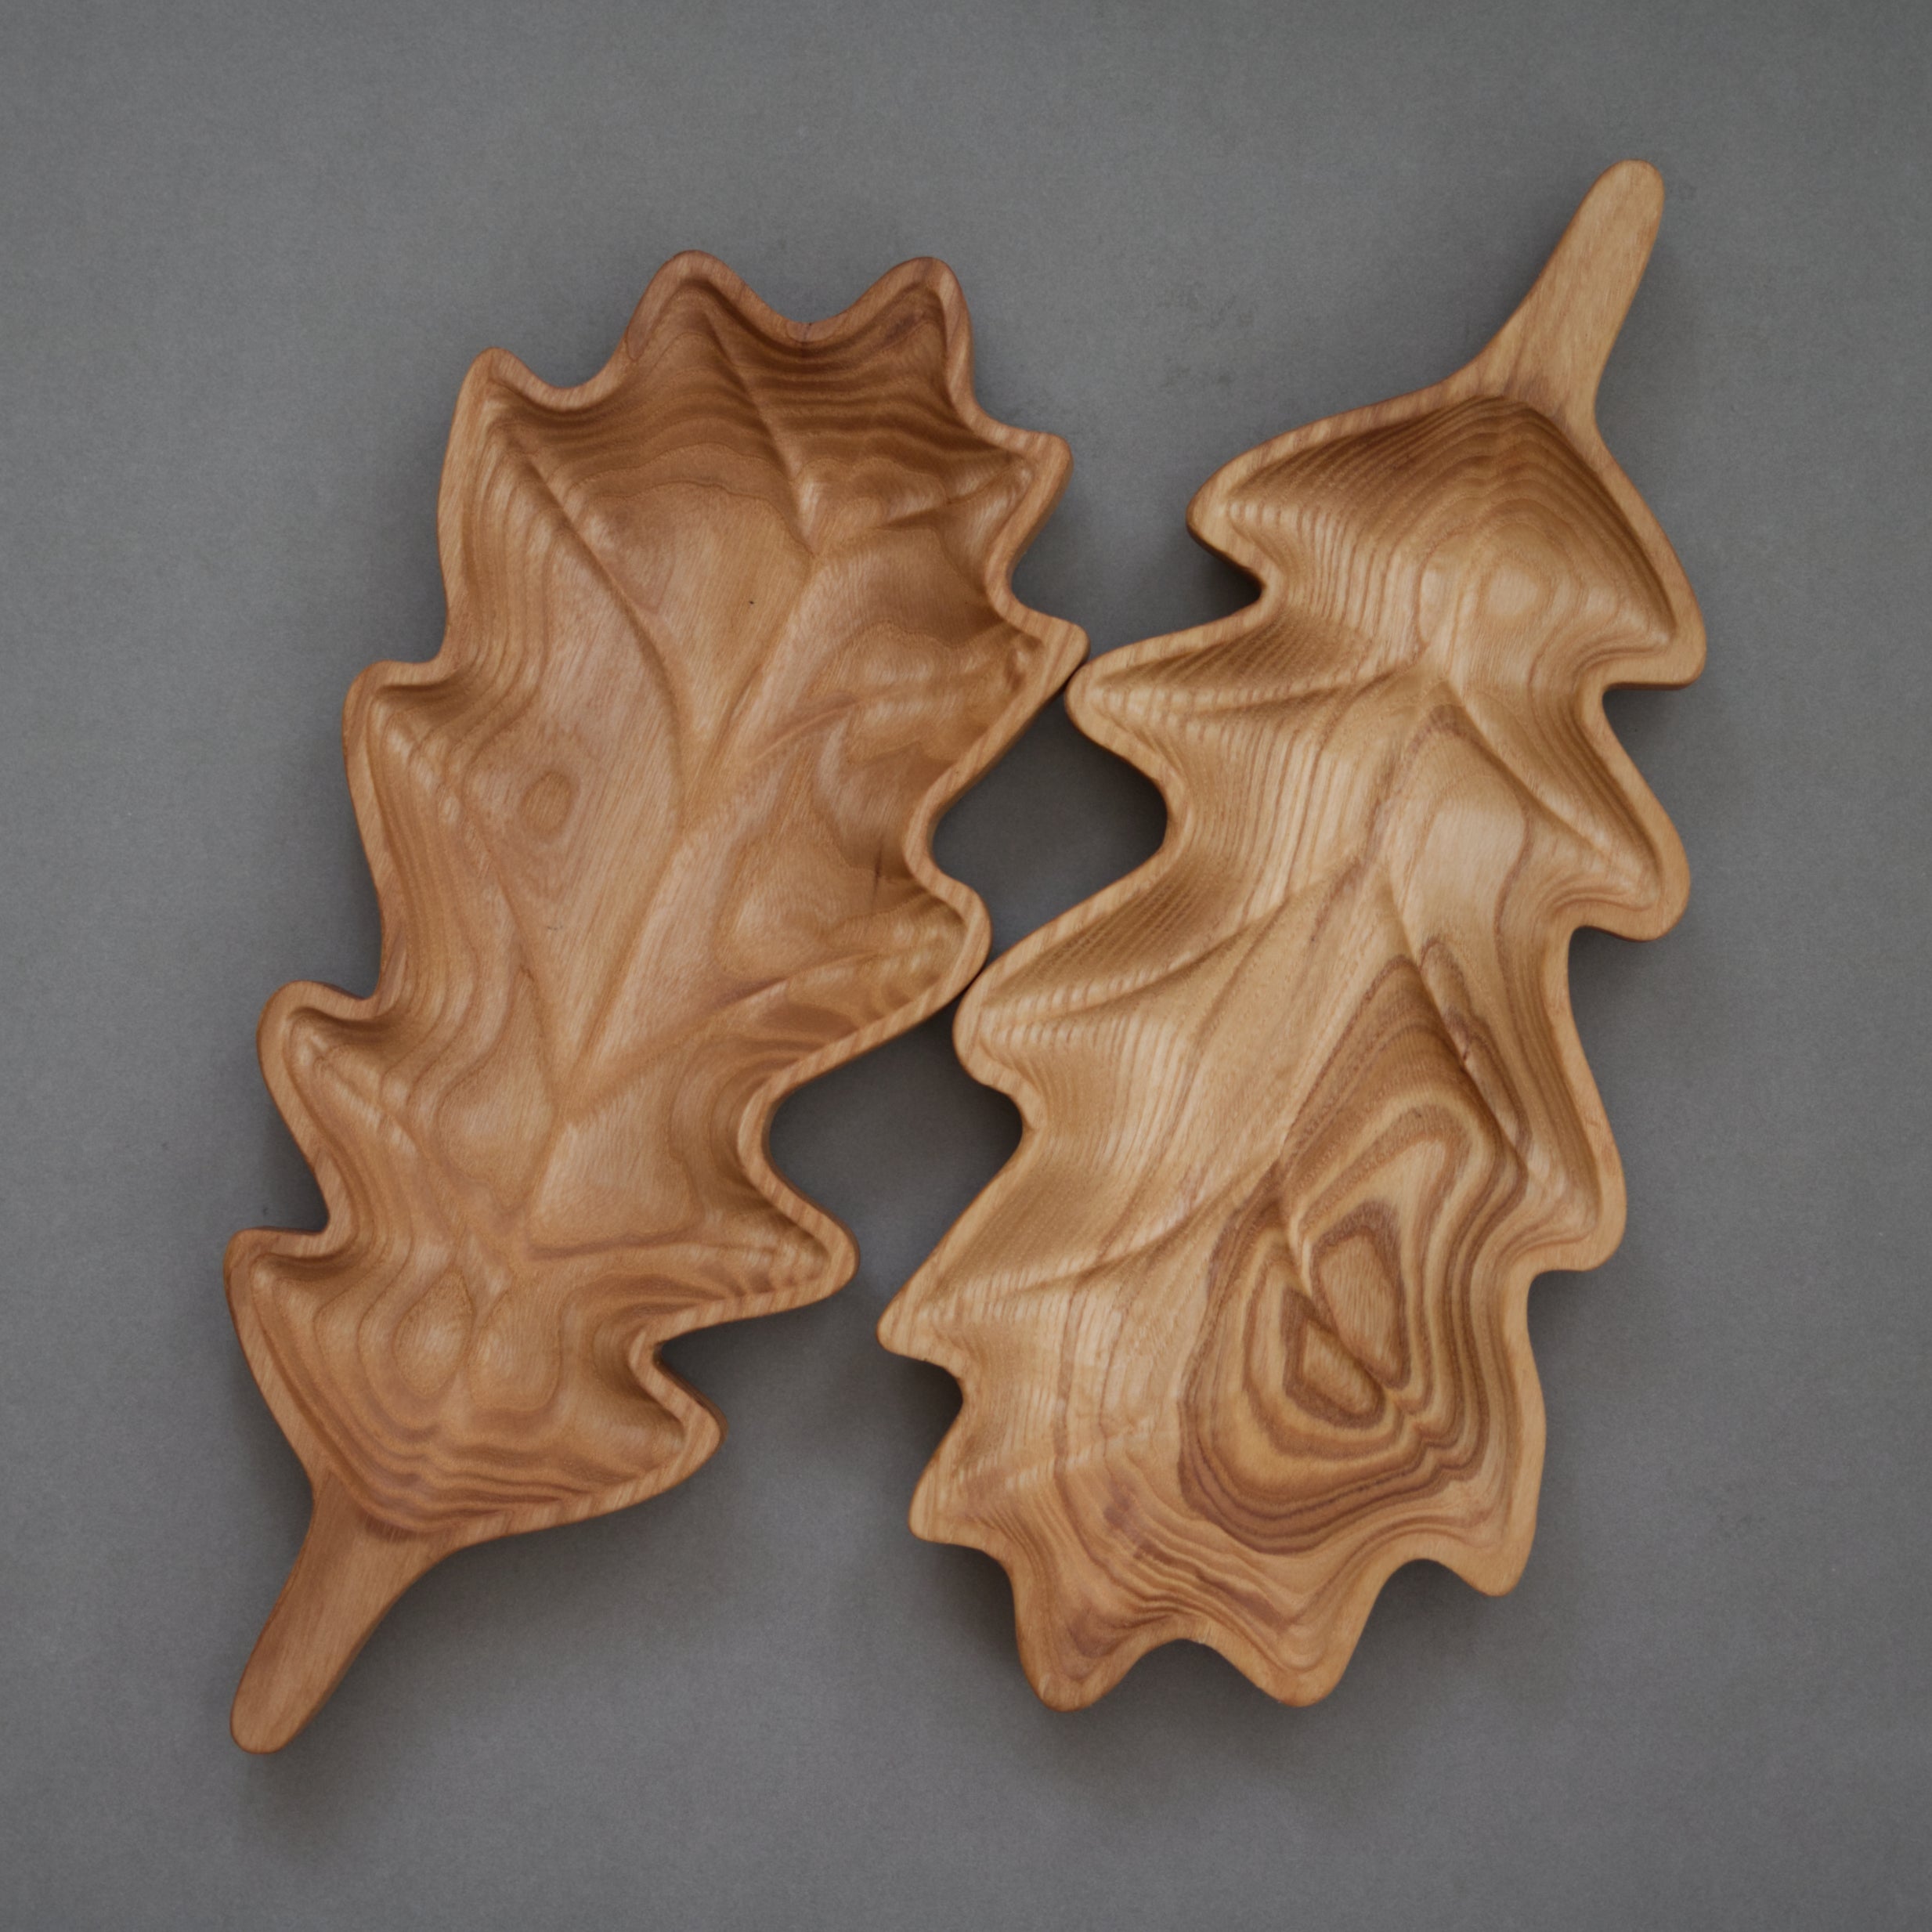 Wooden leaf plate